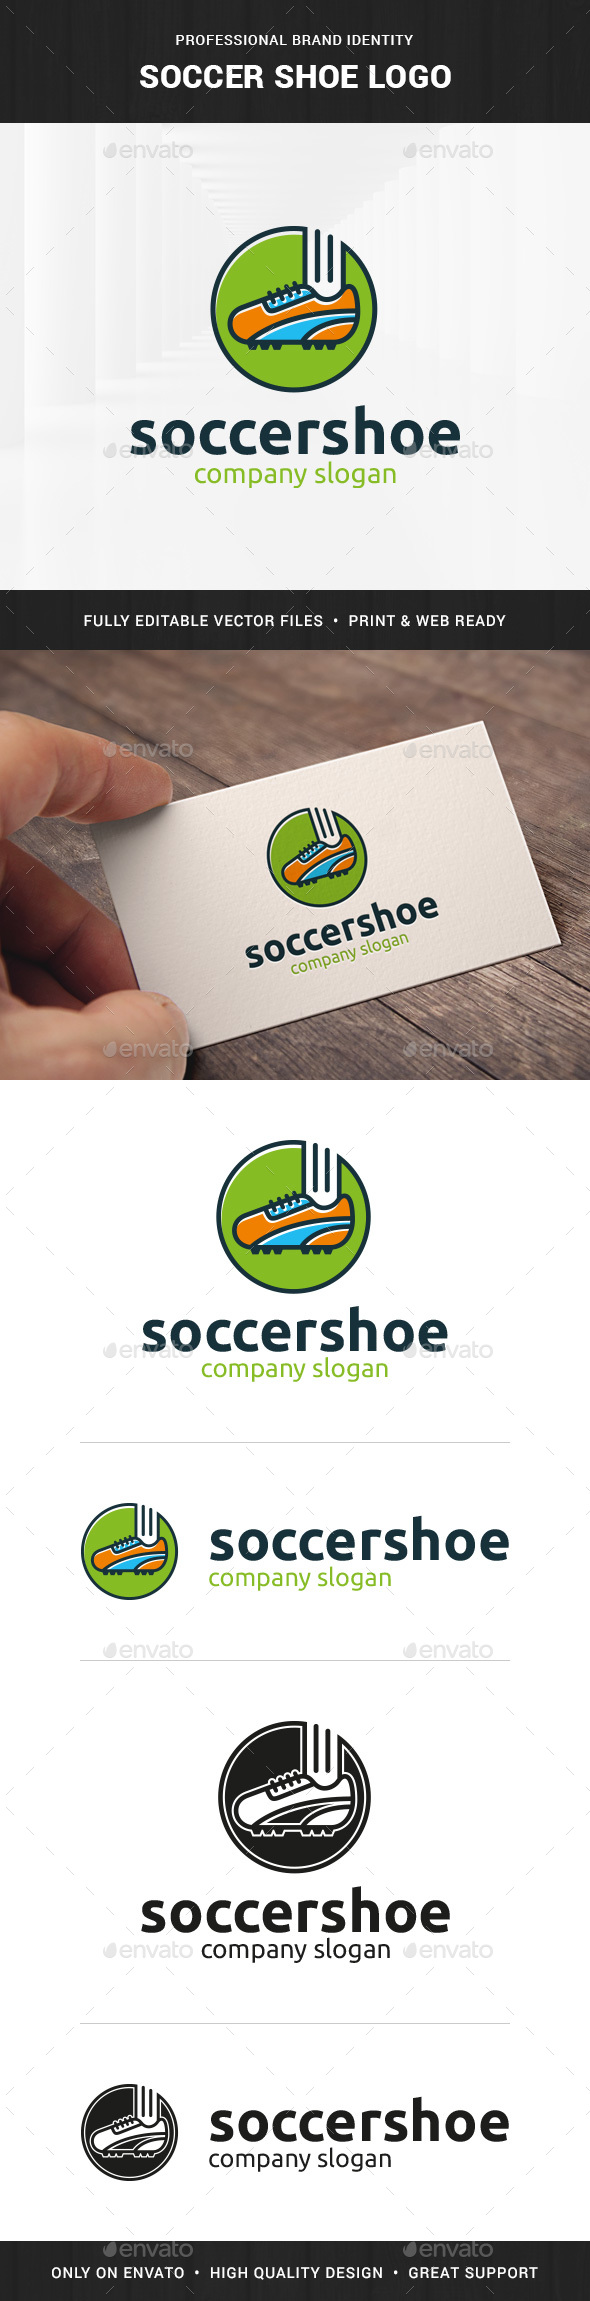 Soccer Shoe Logo Template